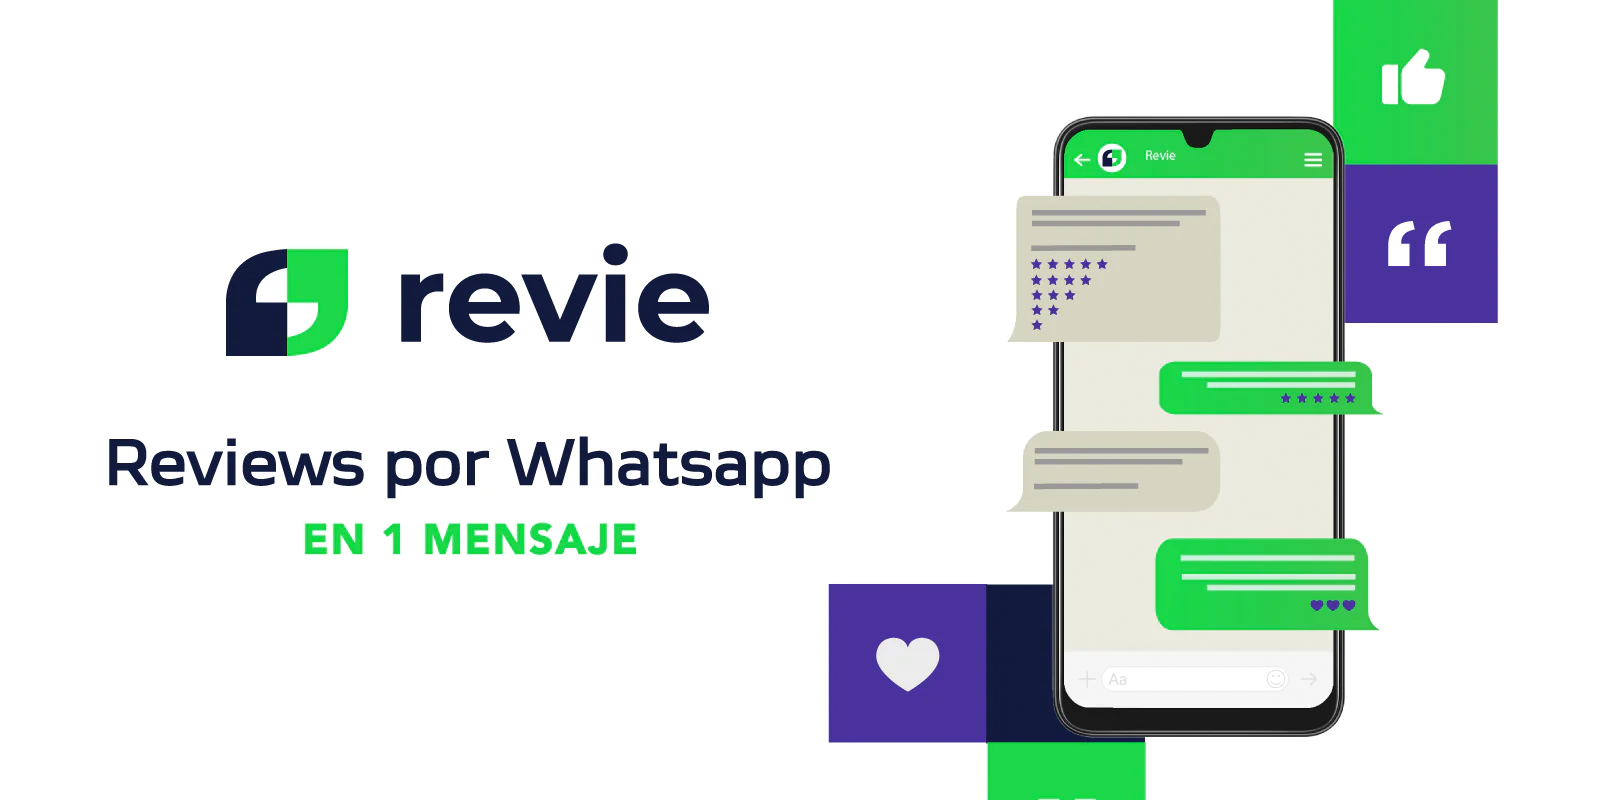 Revie: Reviews por Whatsapp